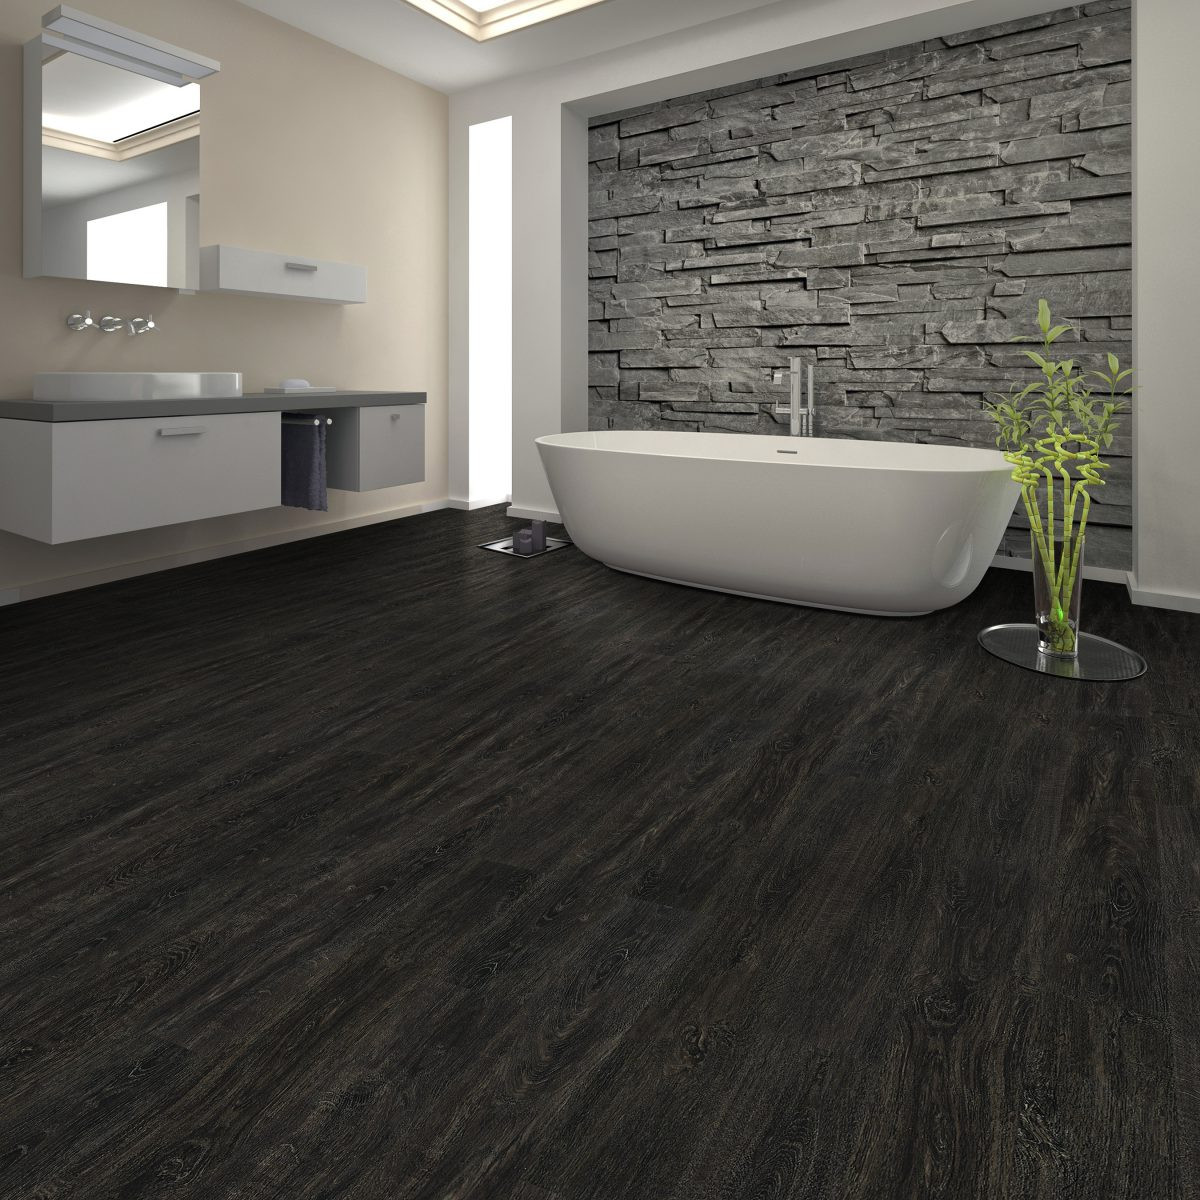 Luxury Vinyl Tile Bathroom
 5 Flooring Options for Kitchens and Bathrooms